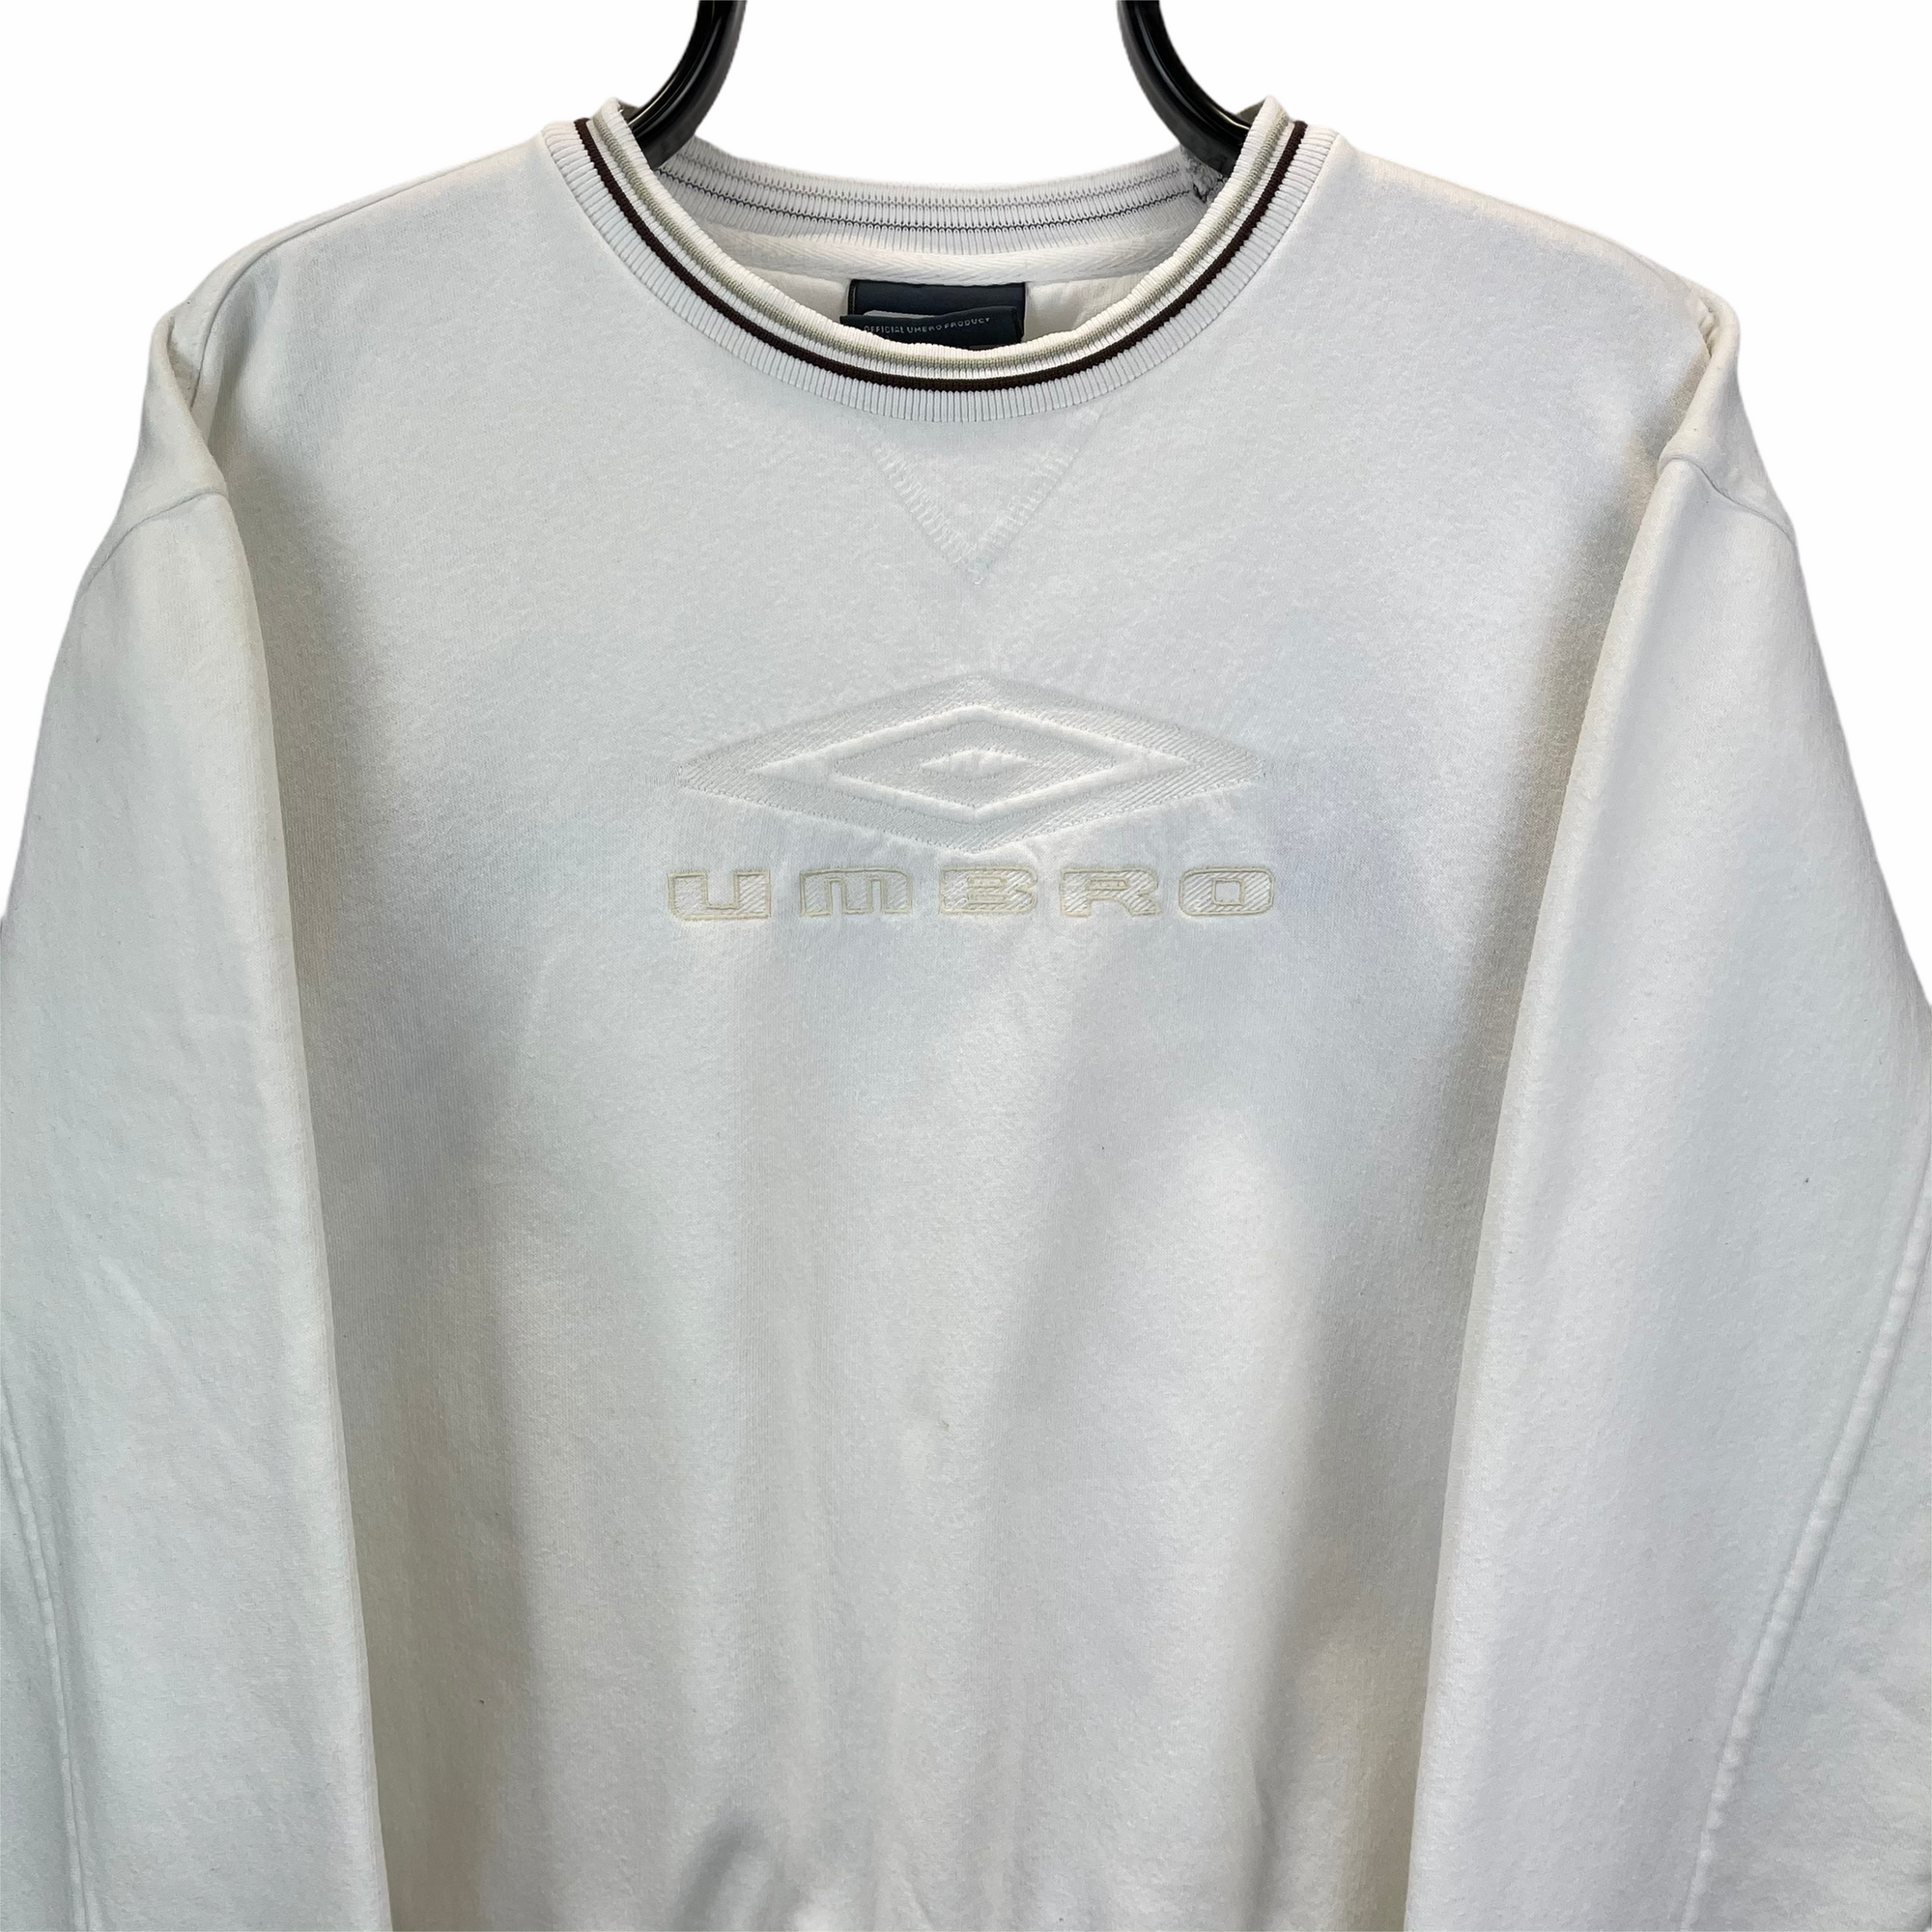 Vintage 90s Umbro Spellout Sweatshirt in White - Men's Small/Women's Medium